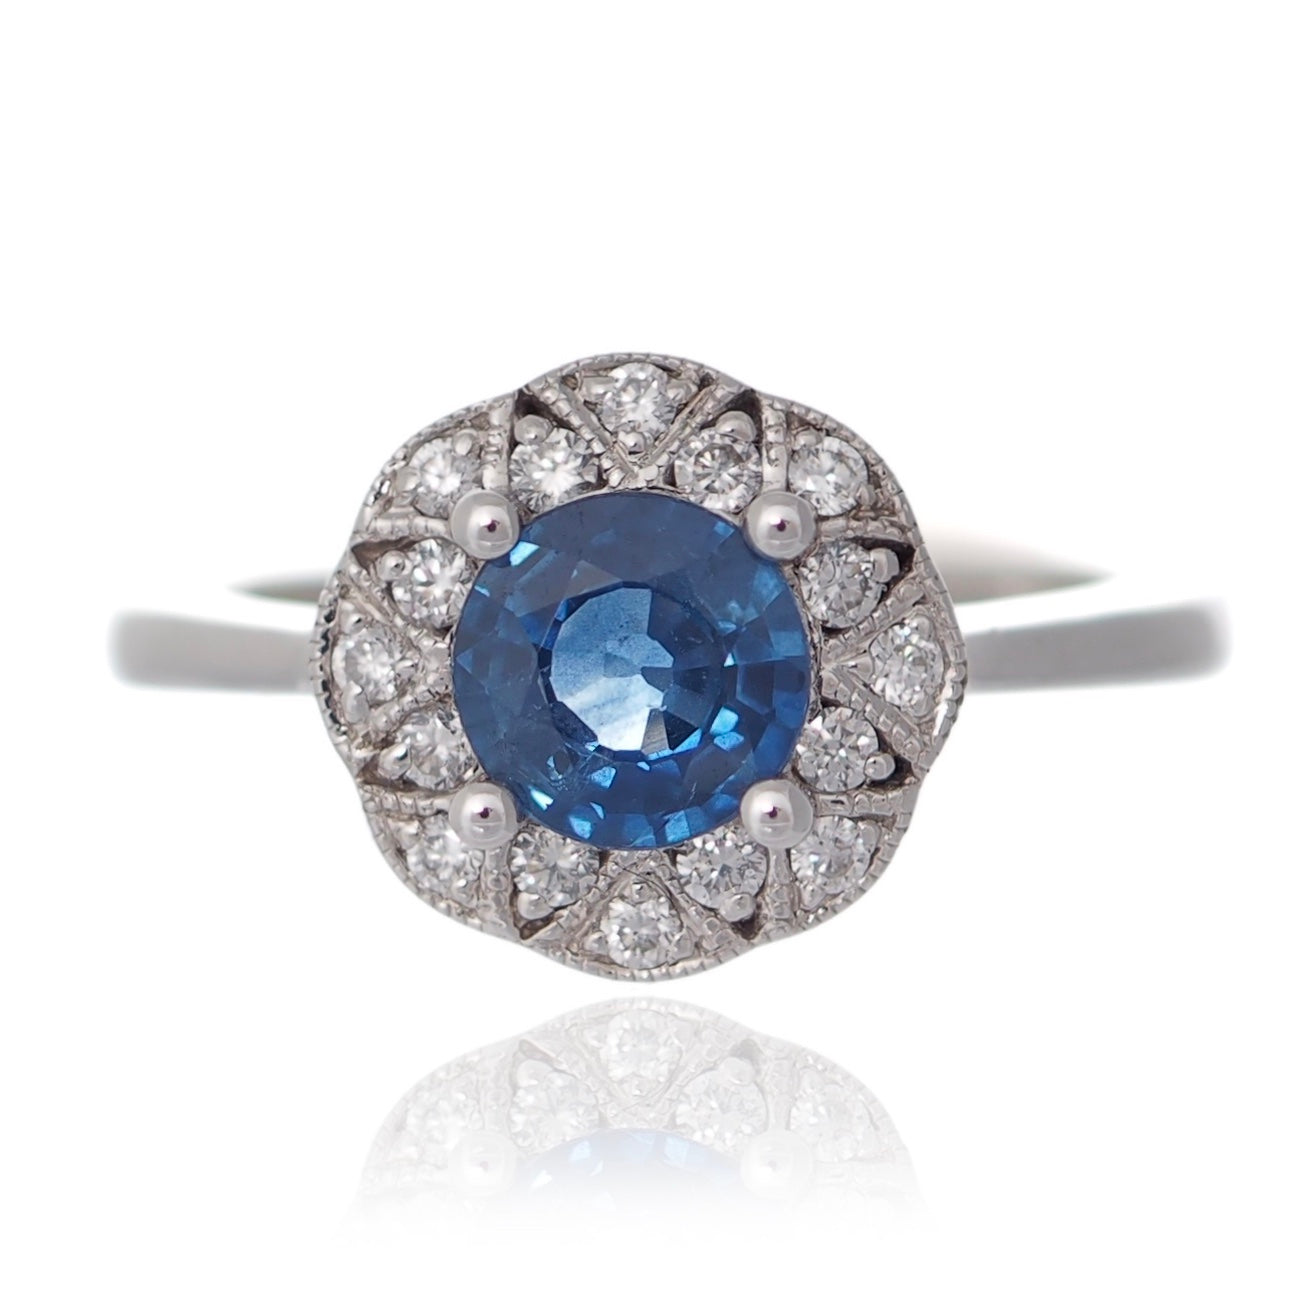 Sapphire and Diamond vintage style engagement ring platinum flower design Fogal and Barnes Harrogate Jewellers